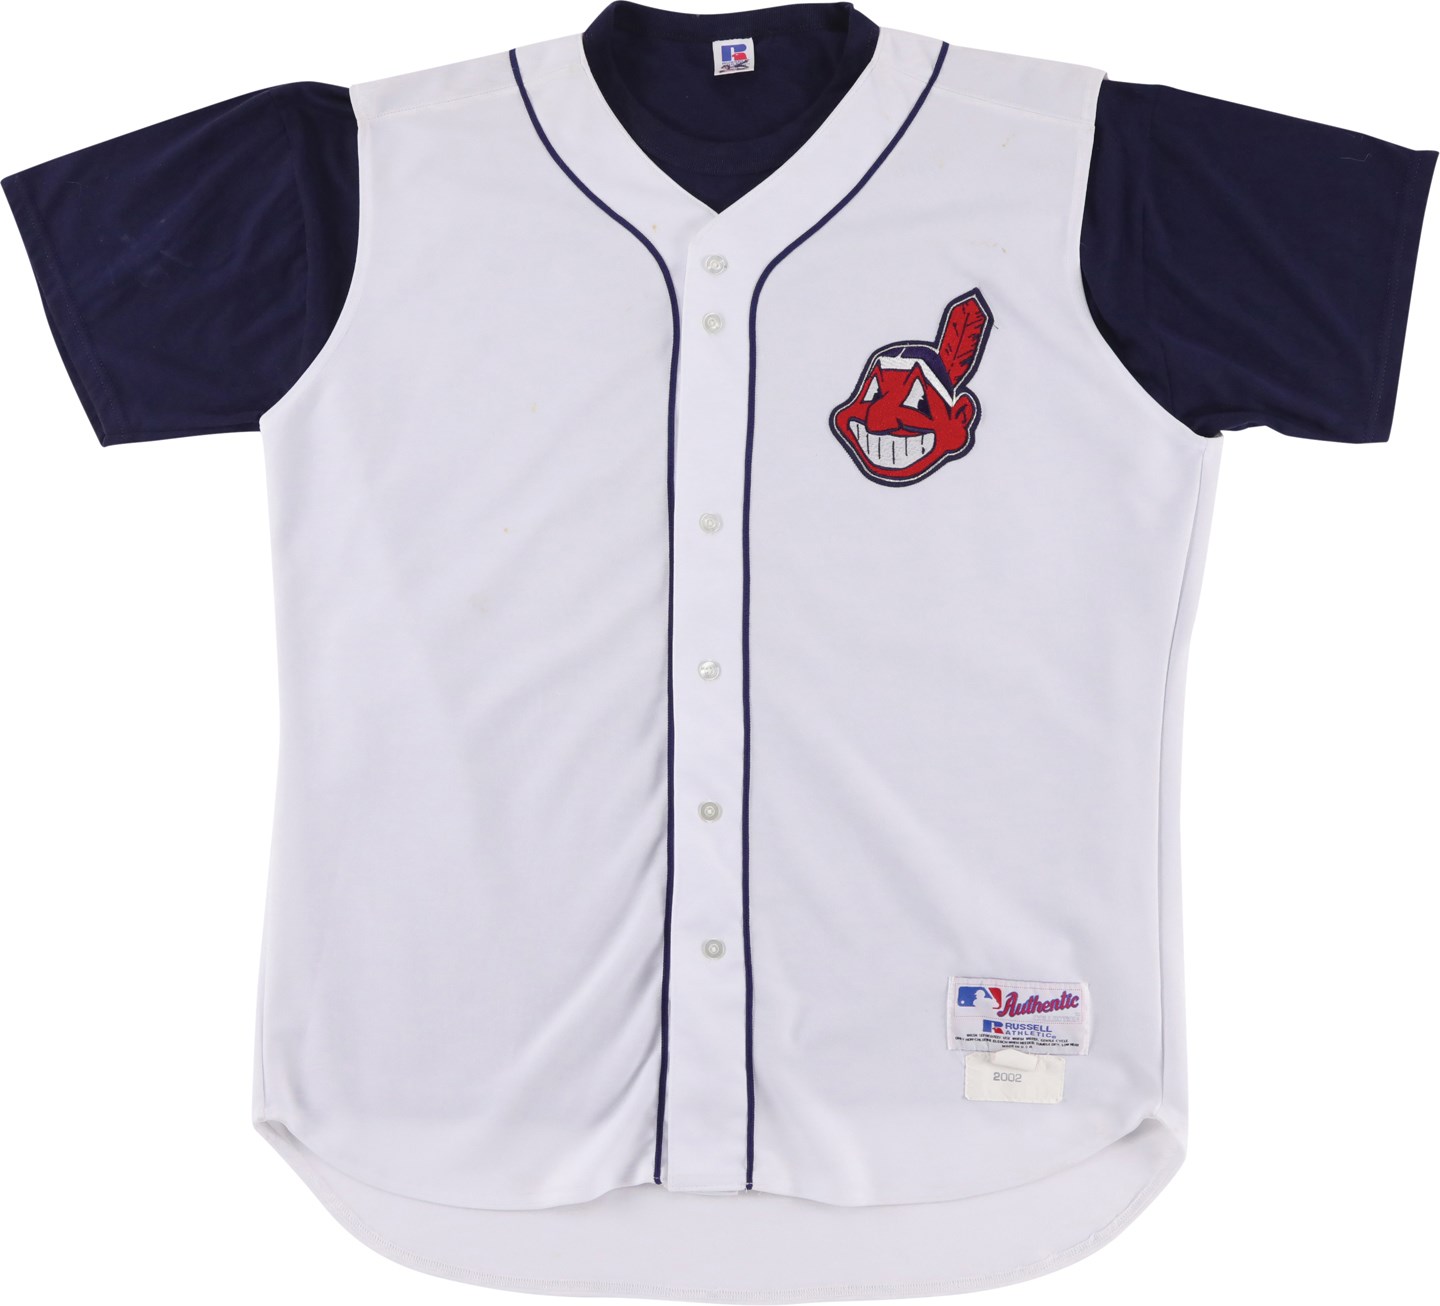 Baseball Equipment - 2002 Jim Thome Cleveland Indians Signed Game Worn Jersey and Undershirt (JSA & Sports Investors LOA)